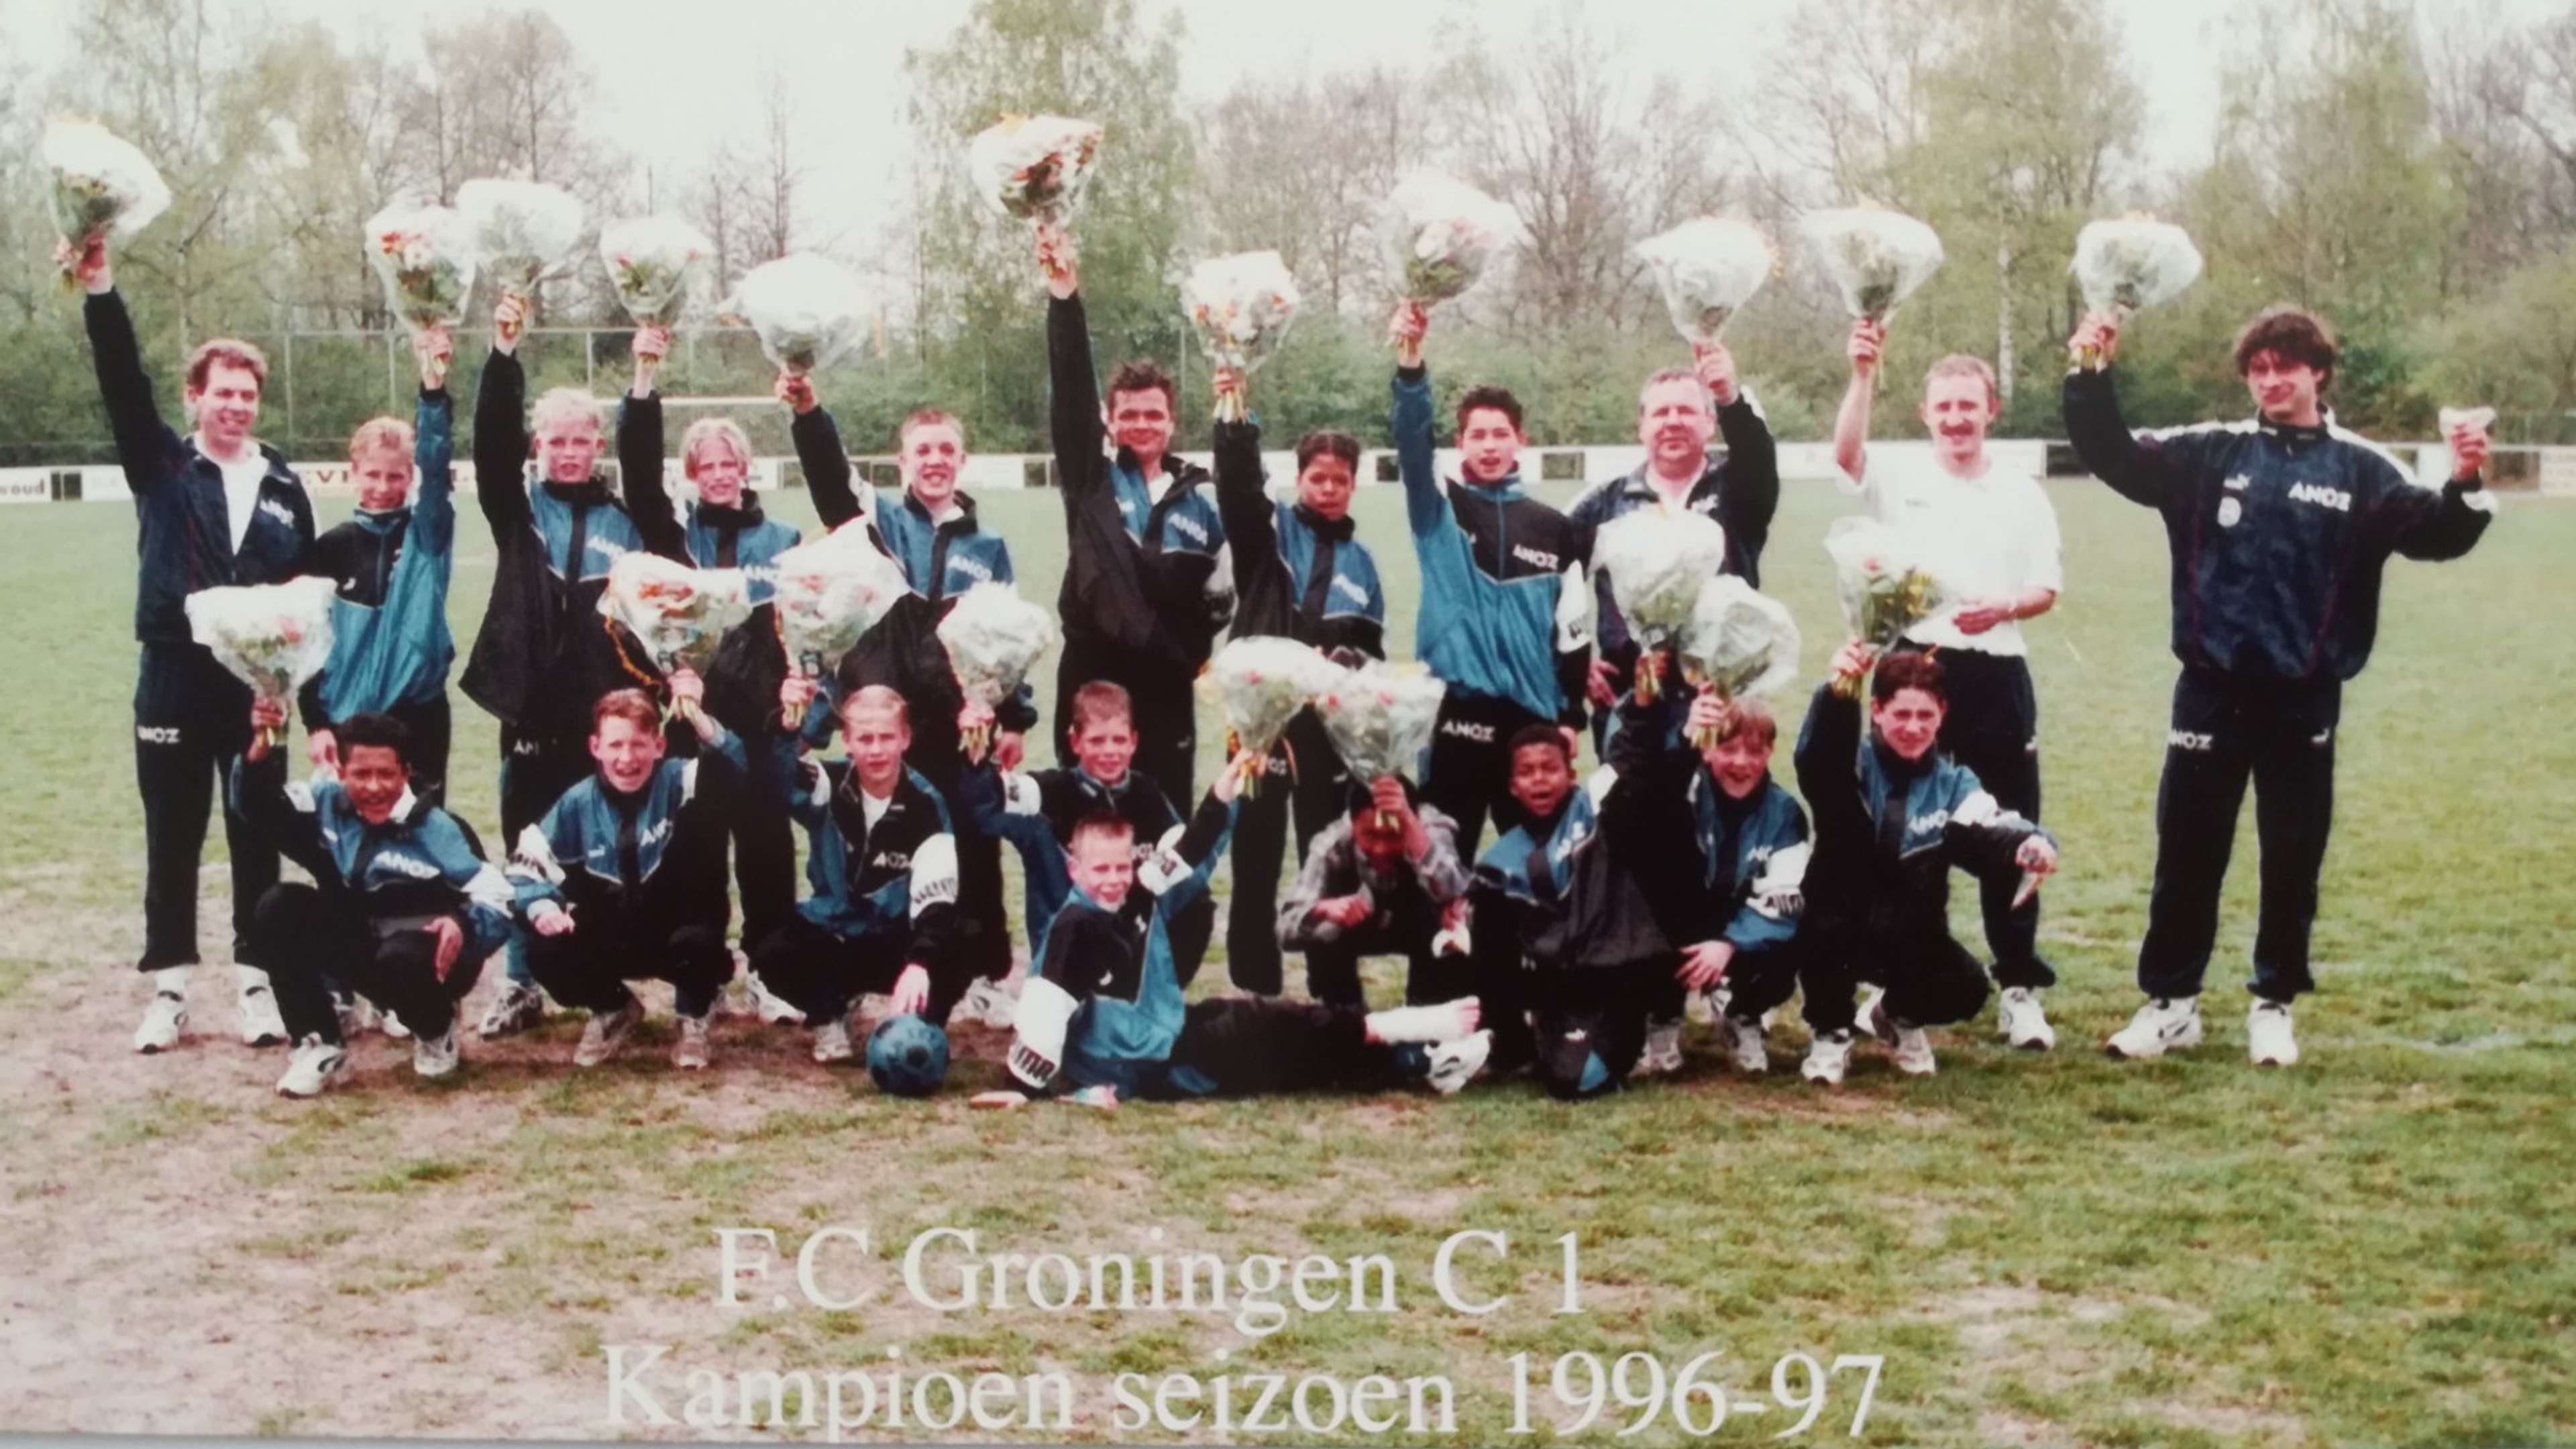 FC Groningen C1 Arjen Robben II